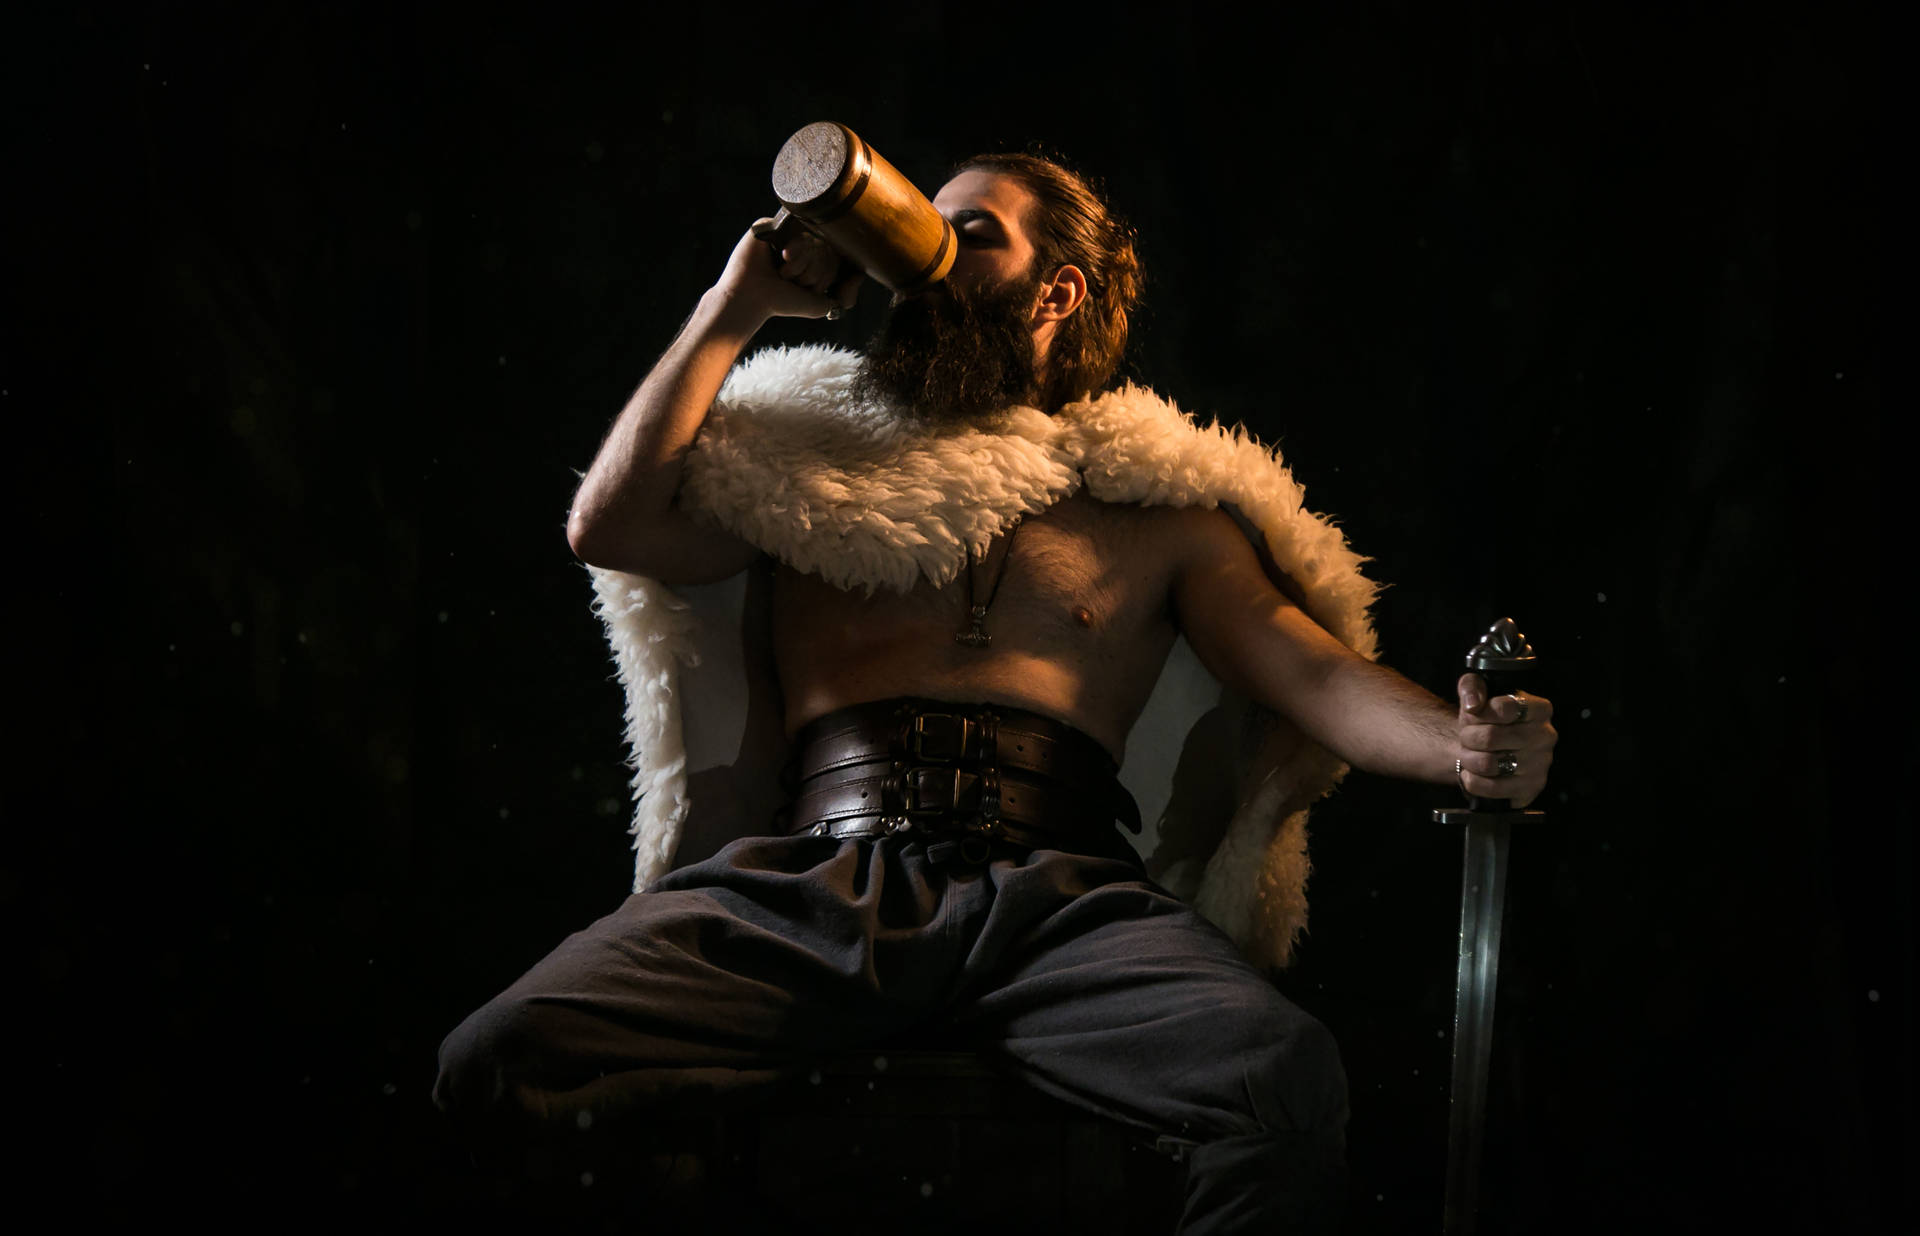 Warrior Drinking From Wooden Mug Background